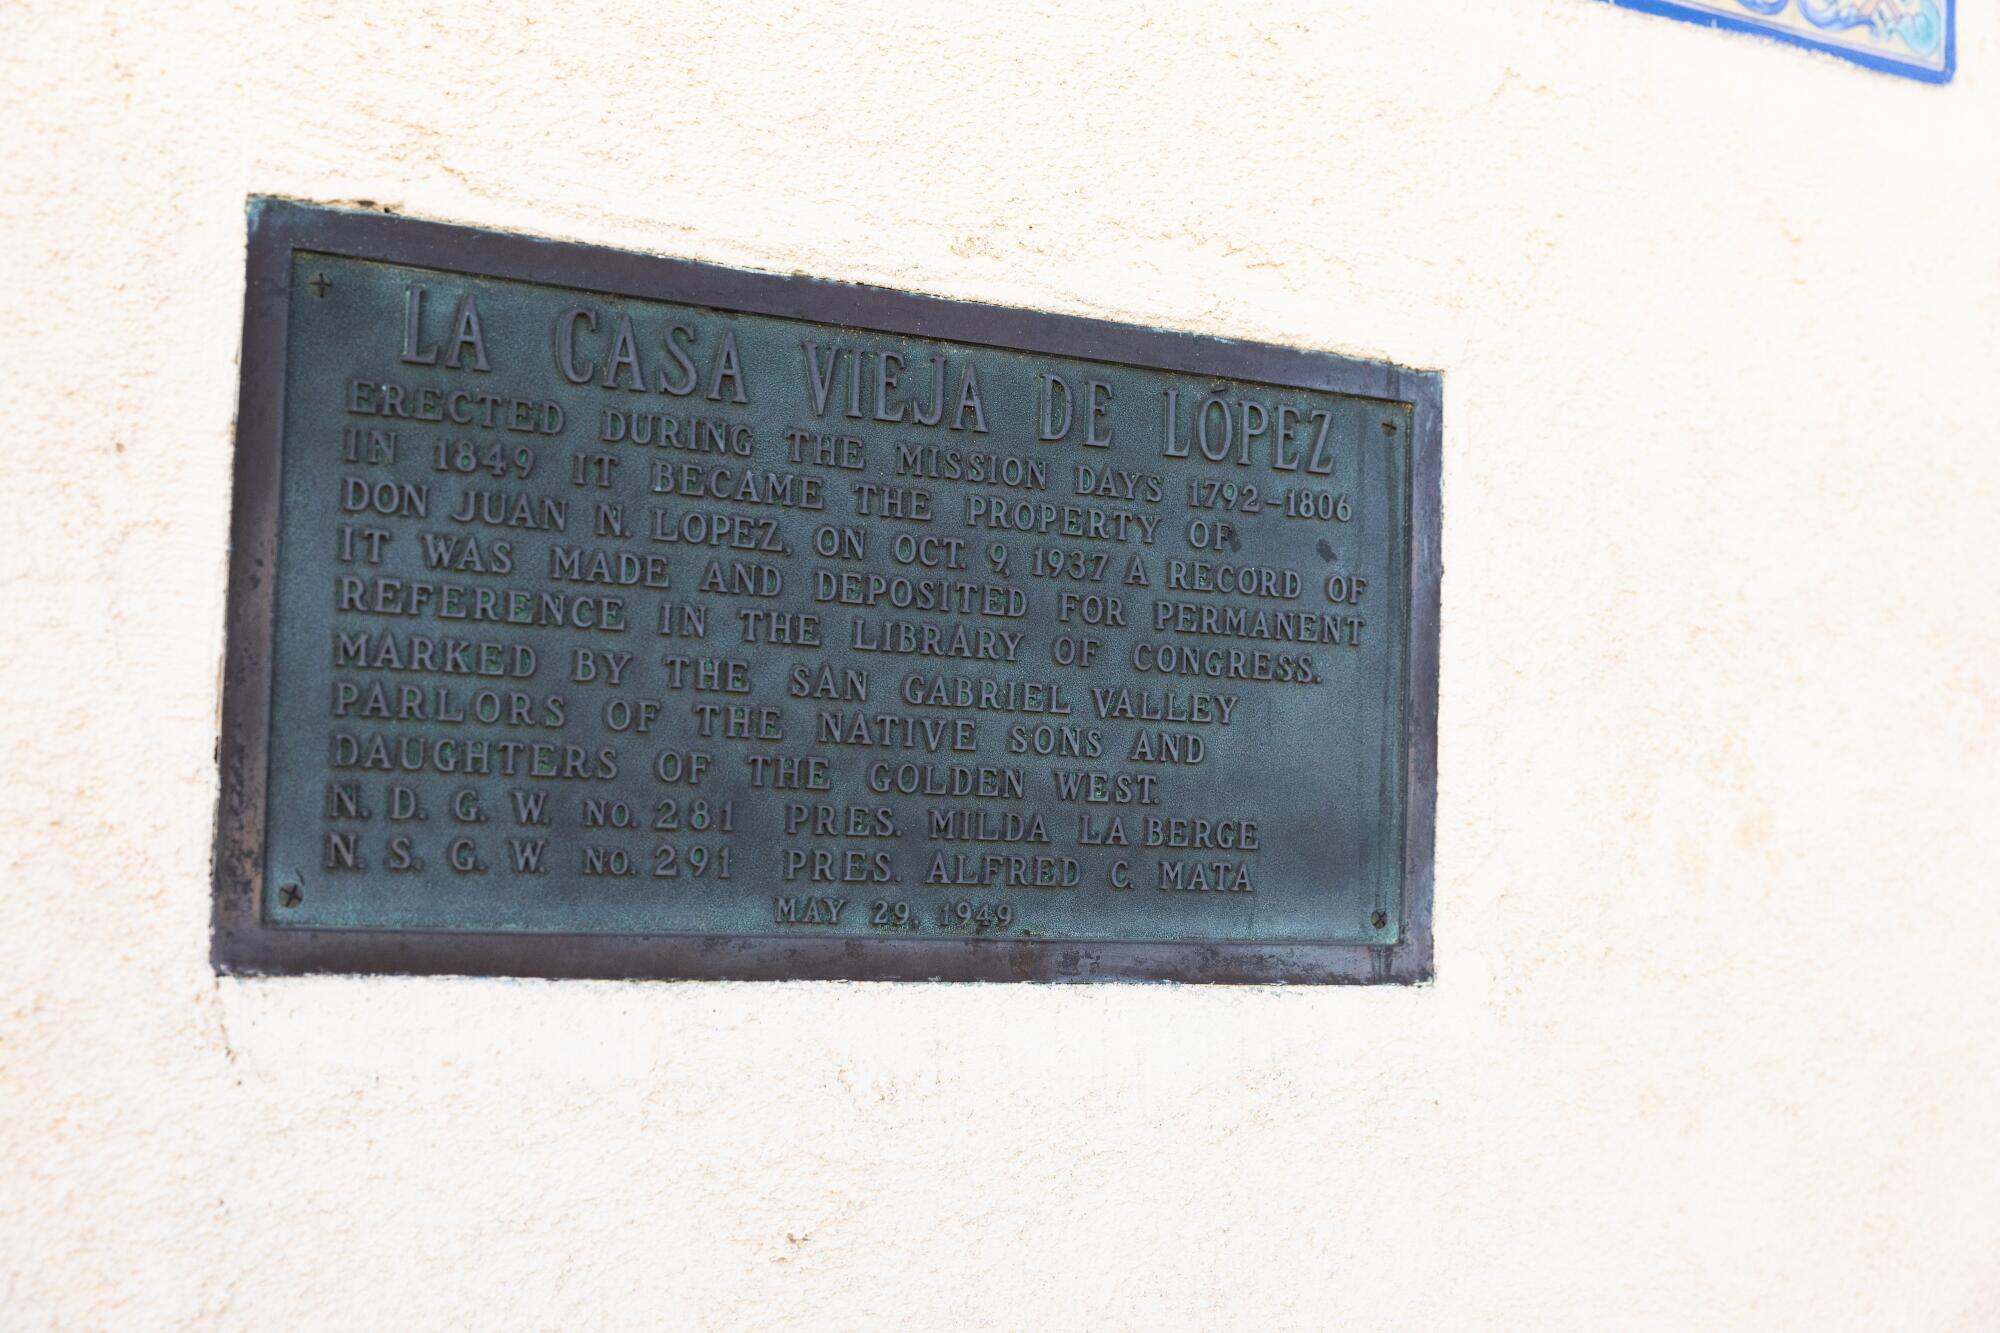 A plaque for La Casa de Vieja de Lopez